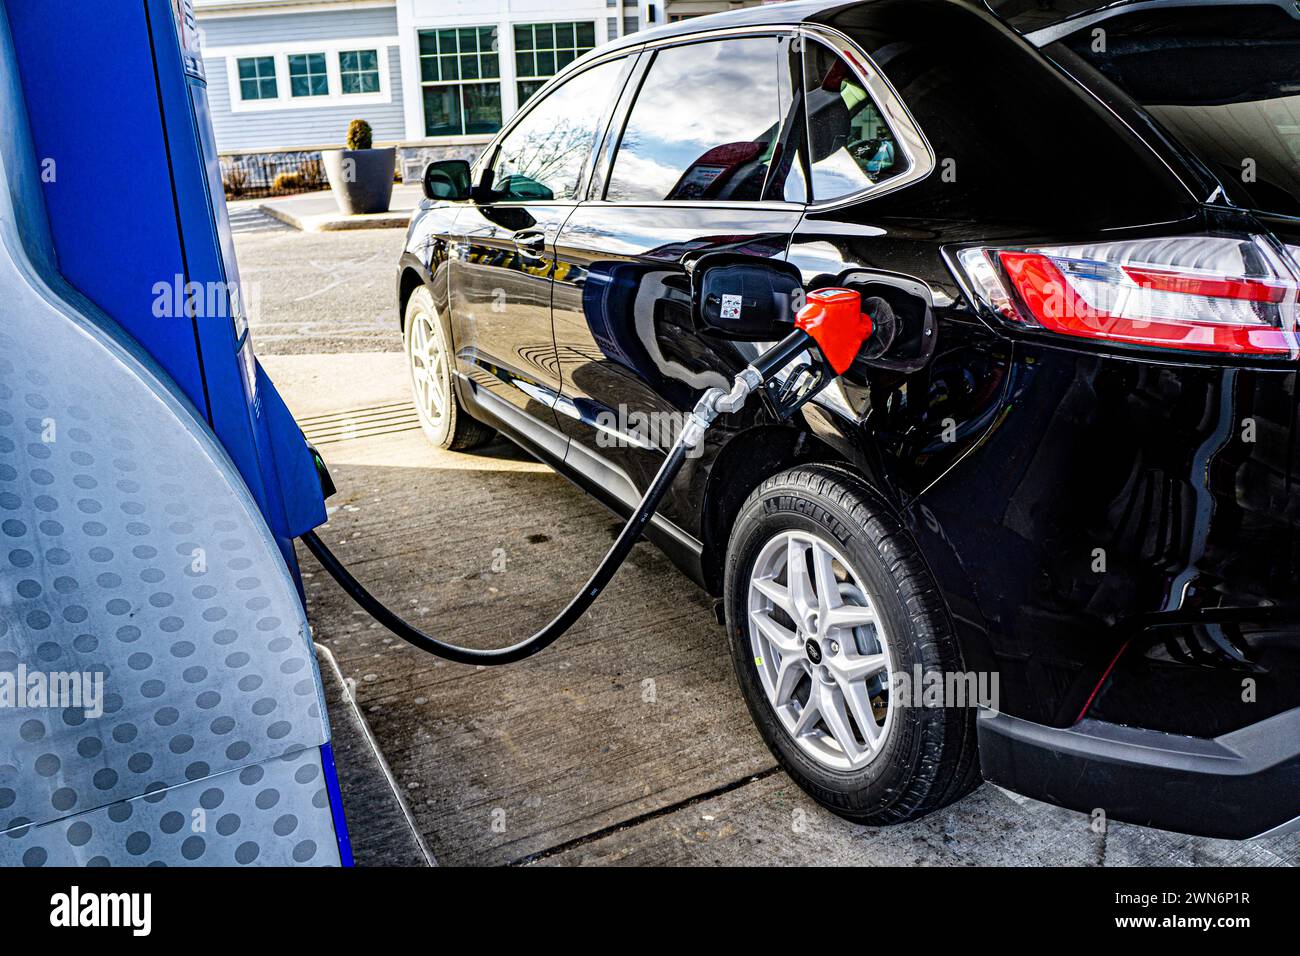 Car refueling at gasoline pump Stock Photo